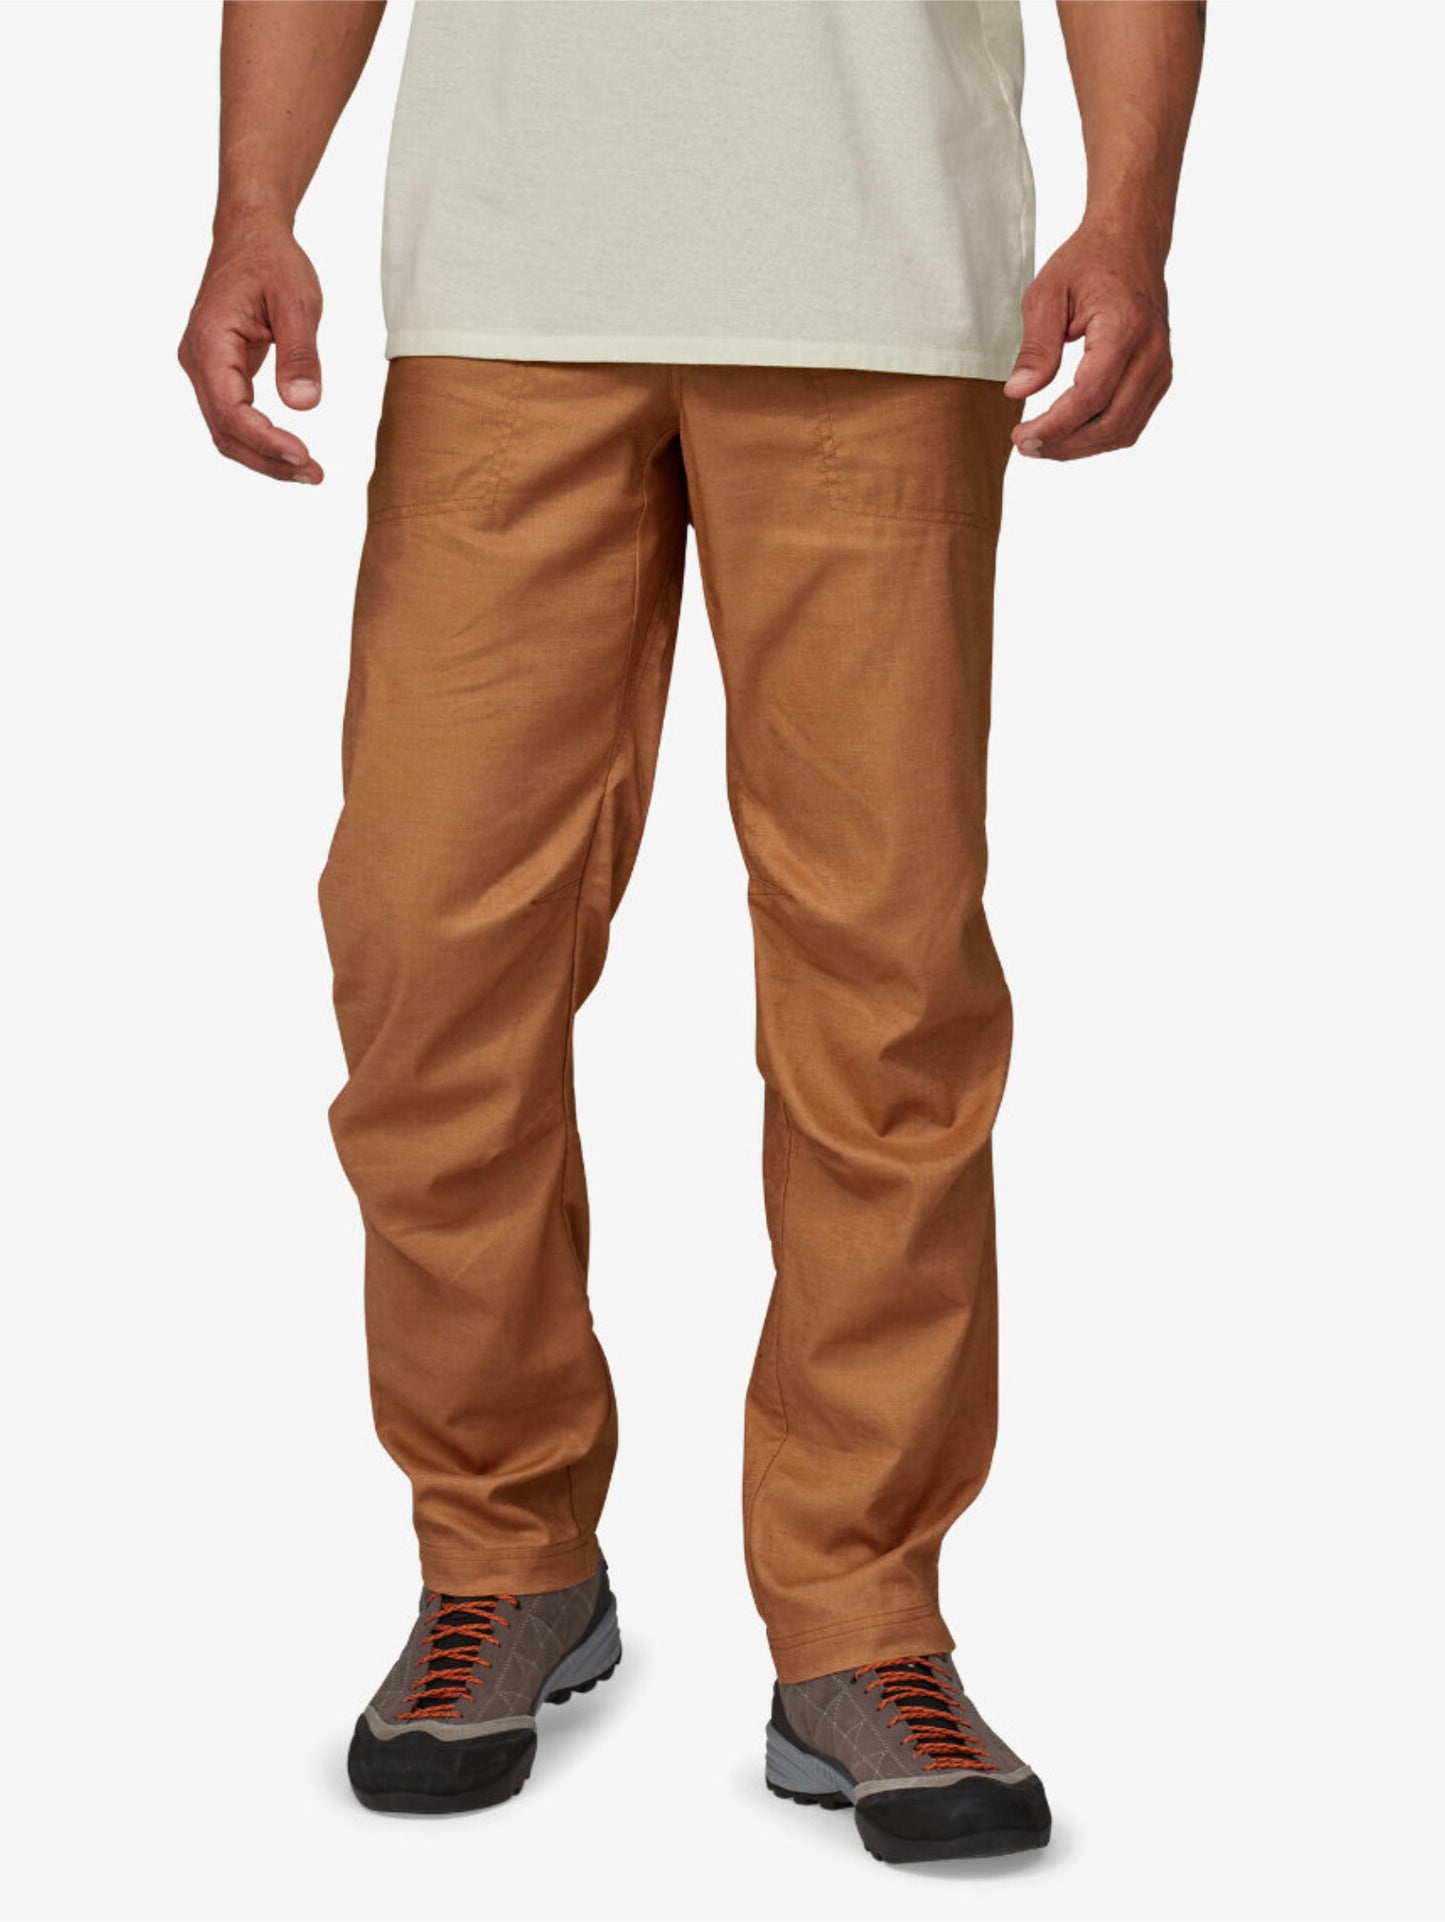 Men's Hampi Rock pants regular trip pantaloni uomo brown 